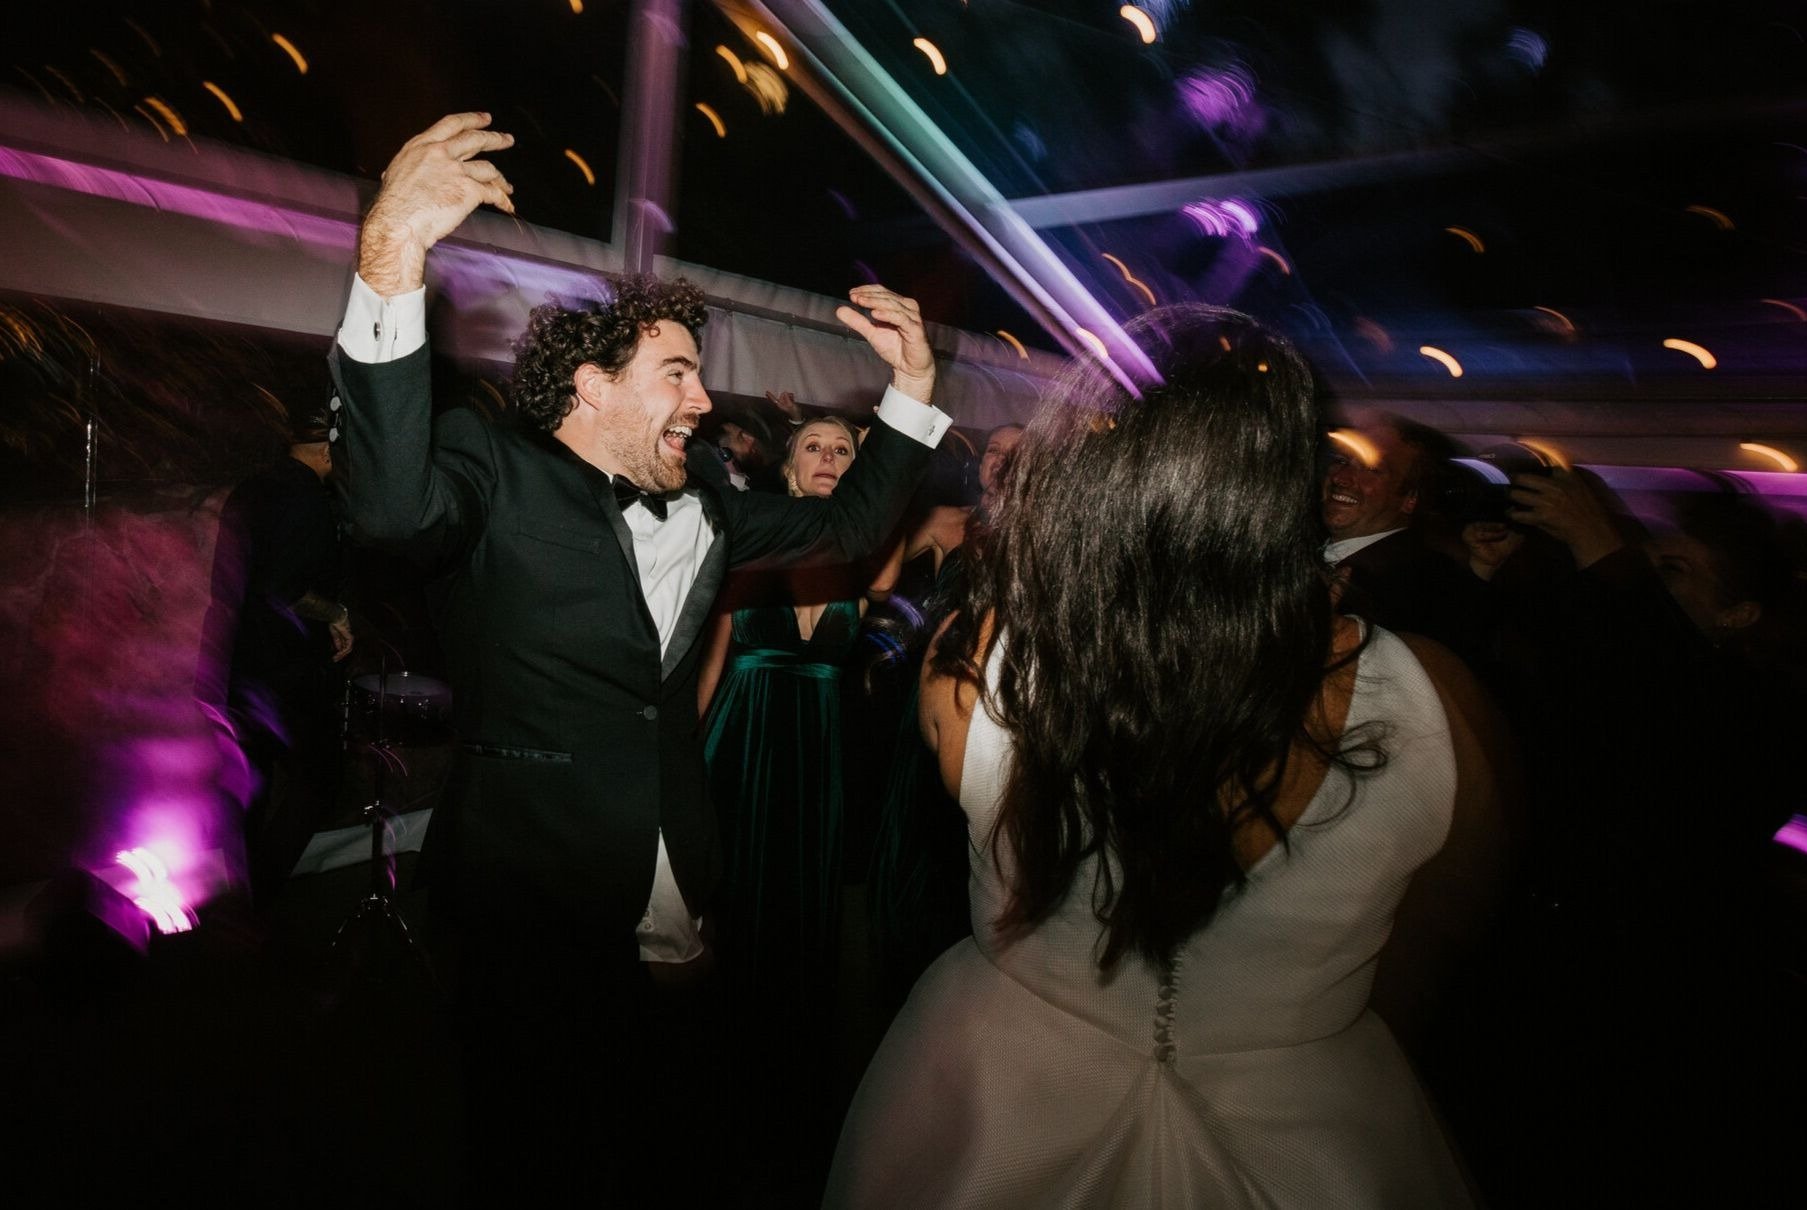 Wedding Dance Songs Get Guests Dancing At Reception